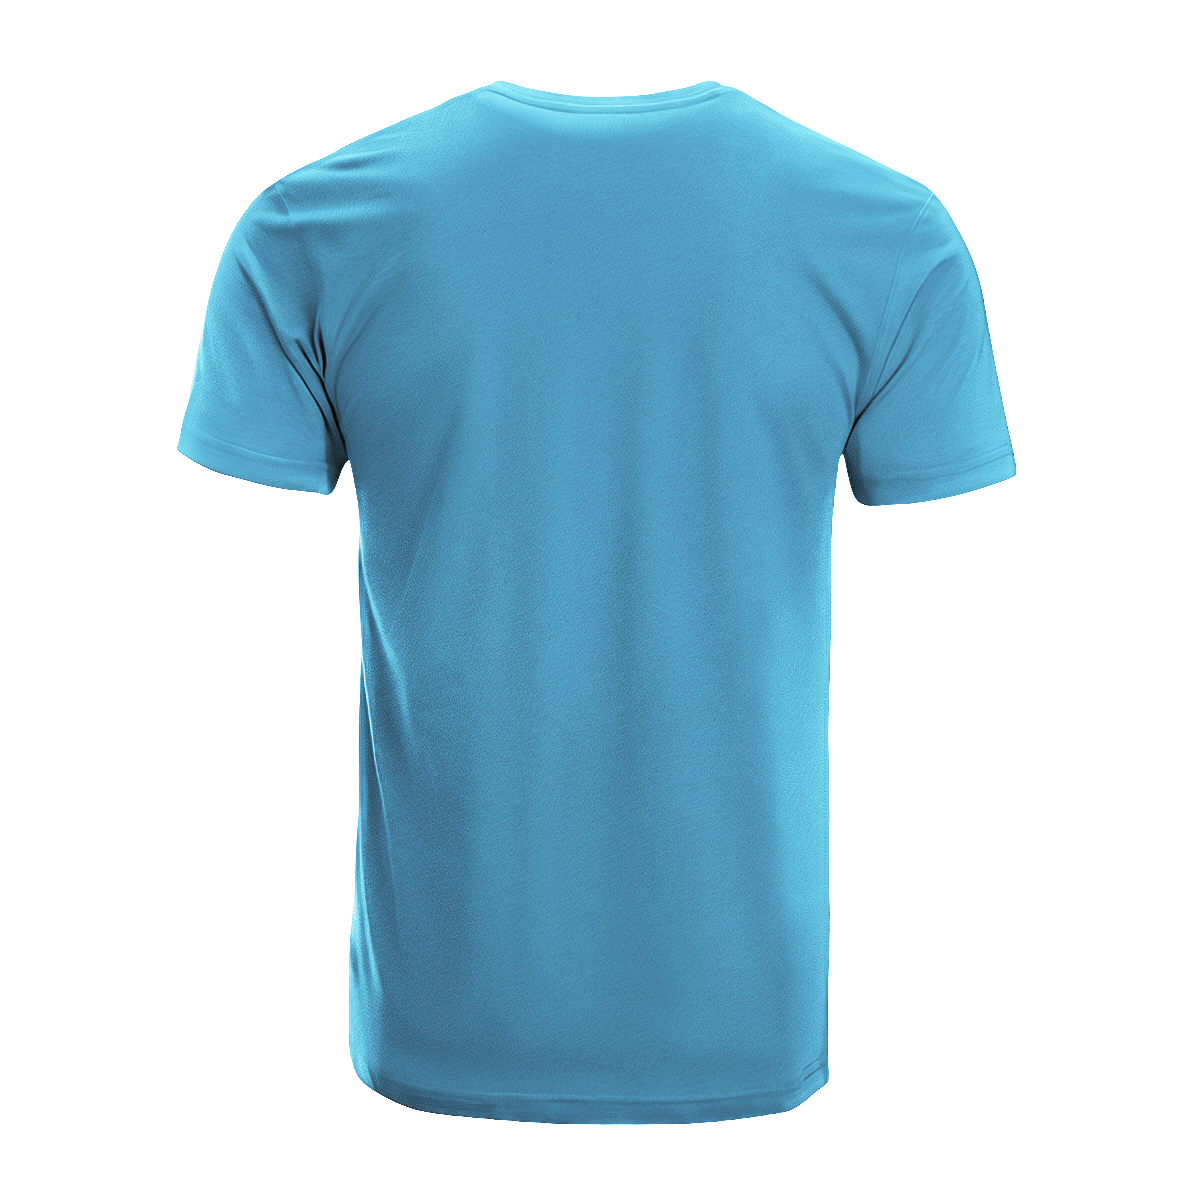 MacFie Tartan Crest T-shirt - I'm not yelling style